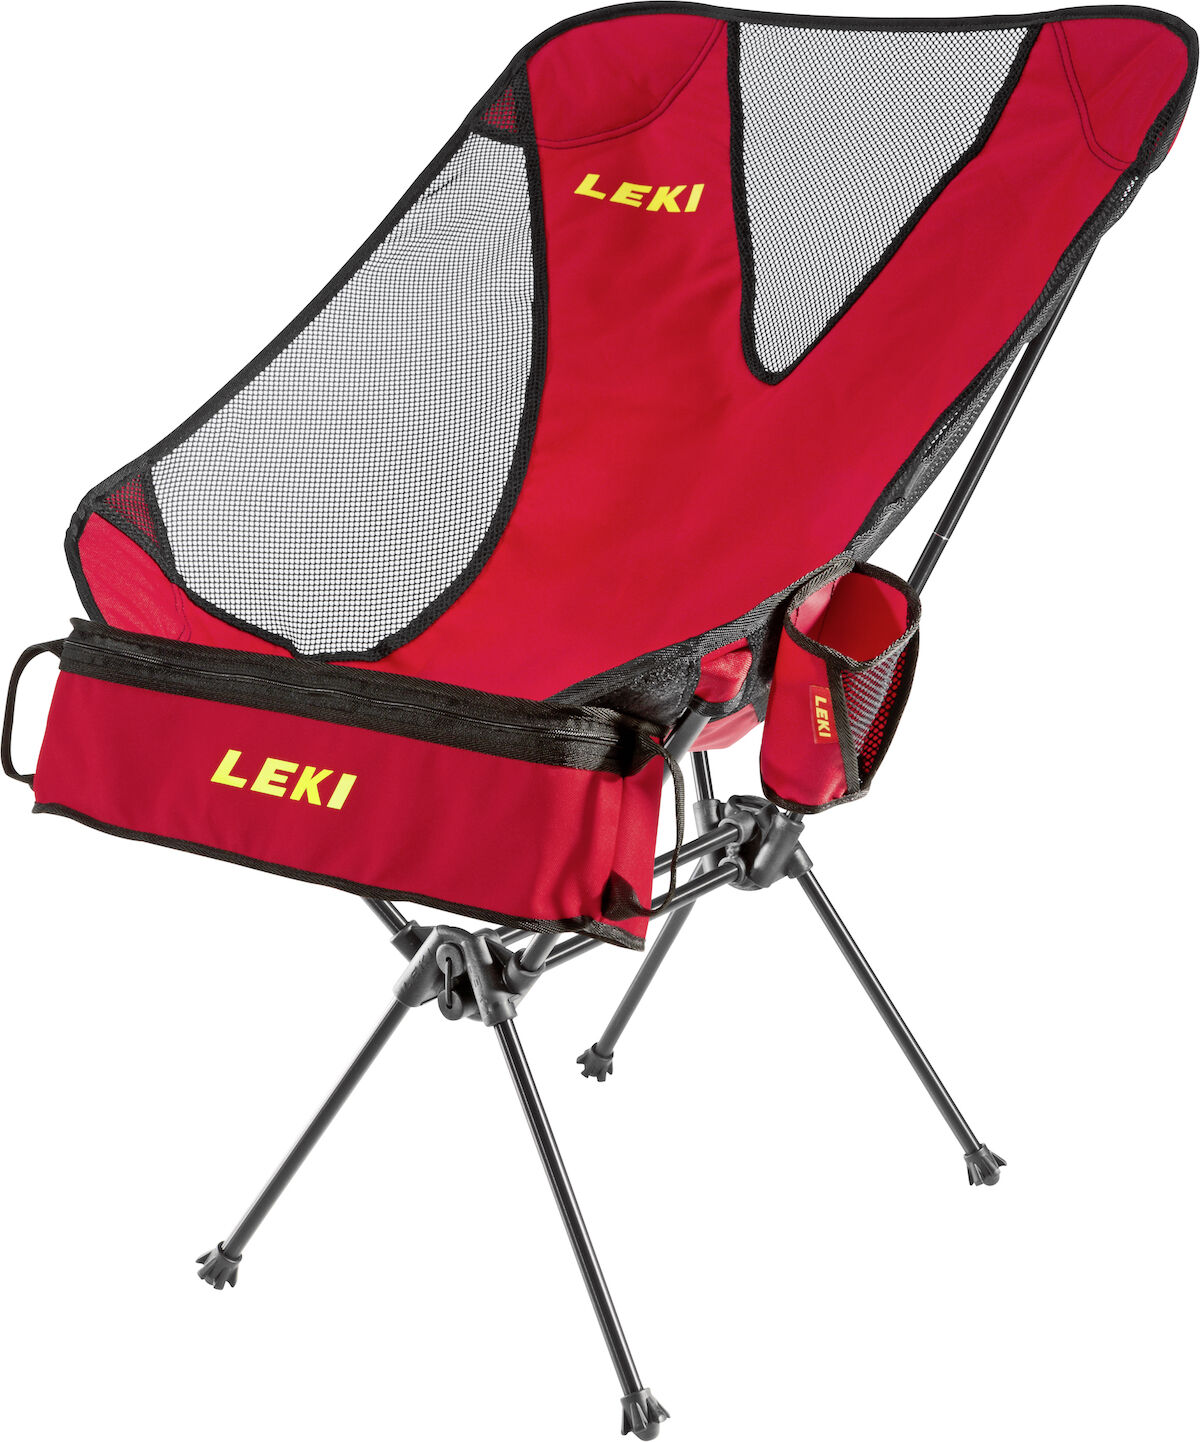 Leki - Chiller - Camping chair